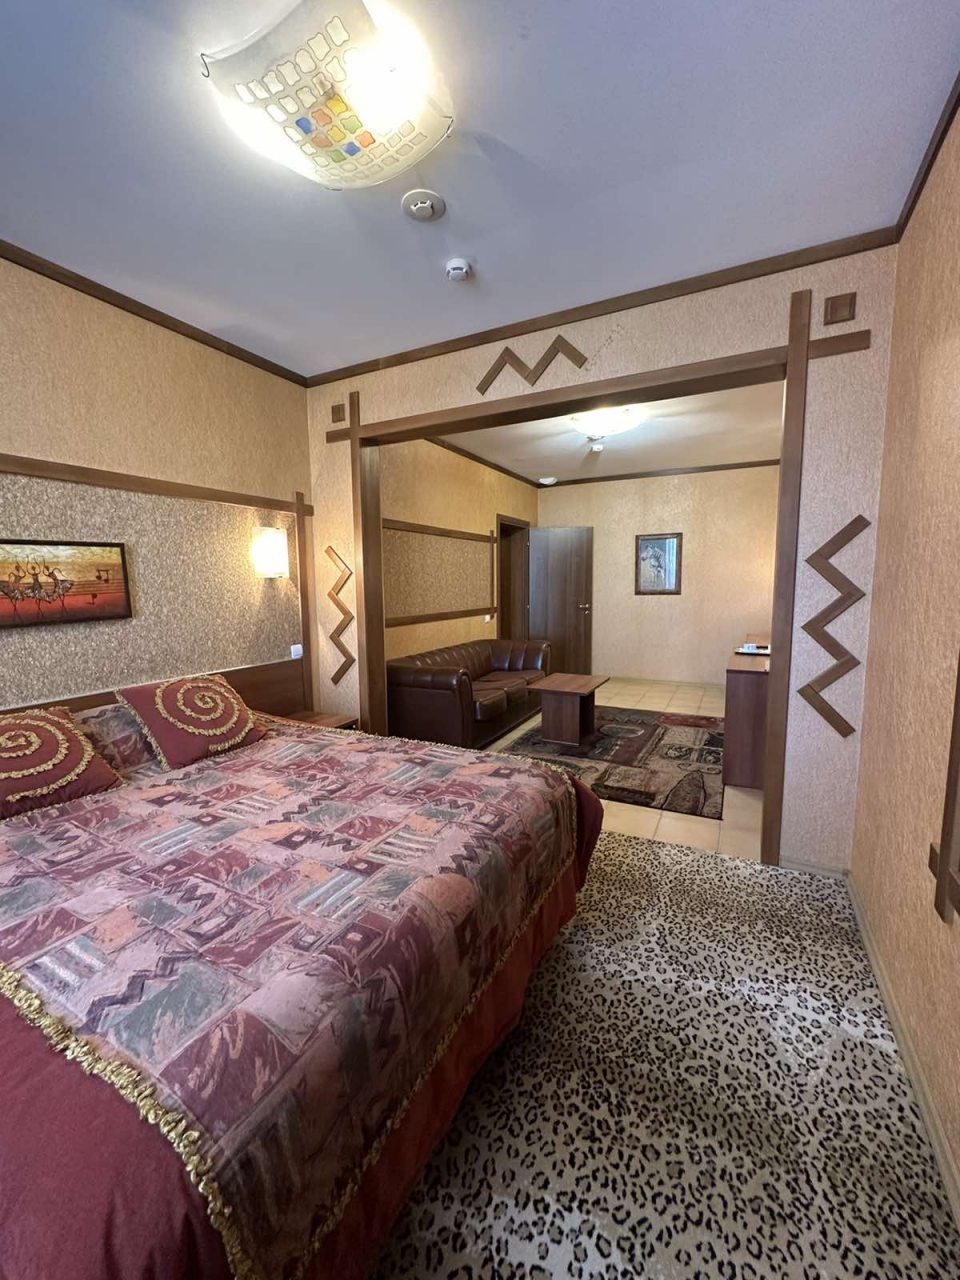 Люкс (Африка 502) гостиницы Ля Ви де Шато, Оренбург